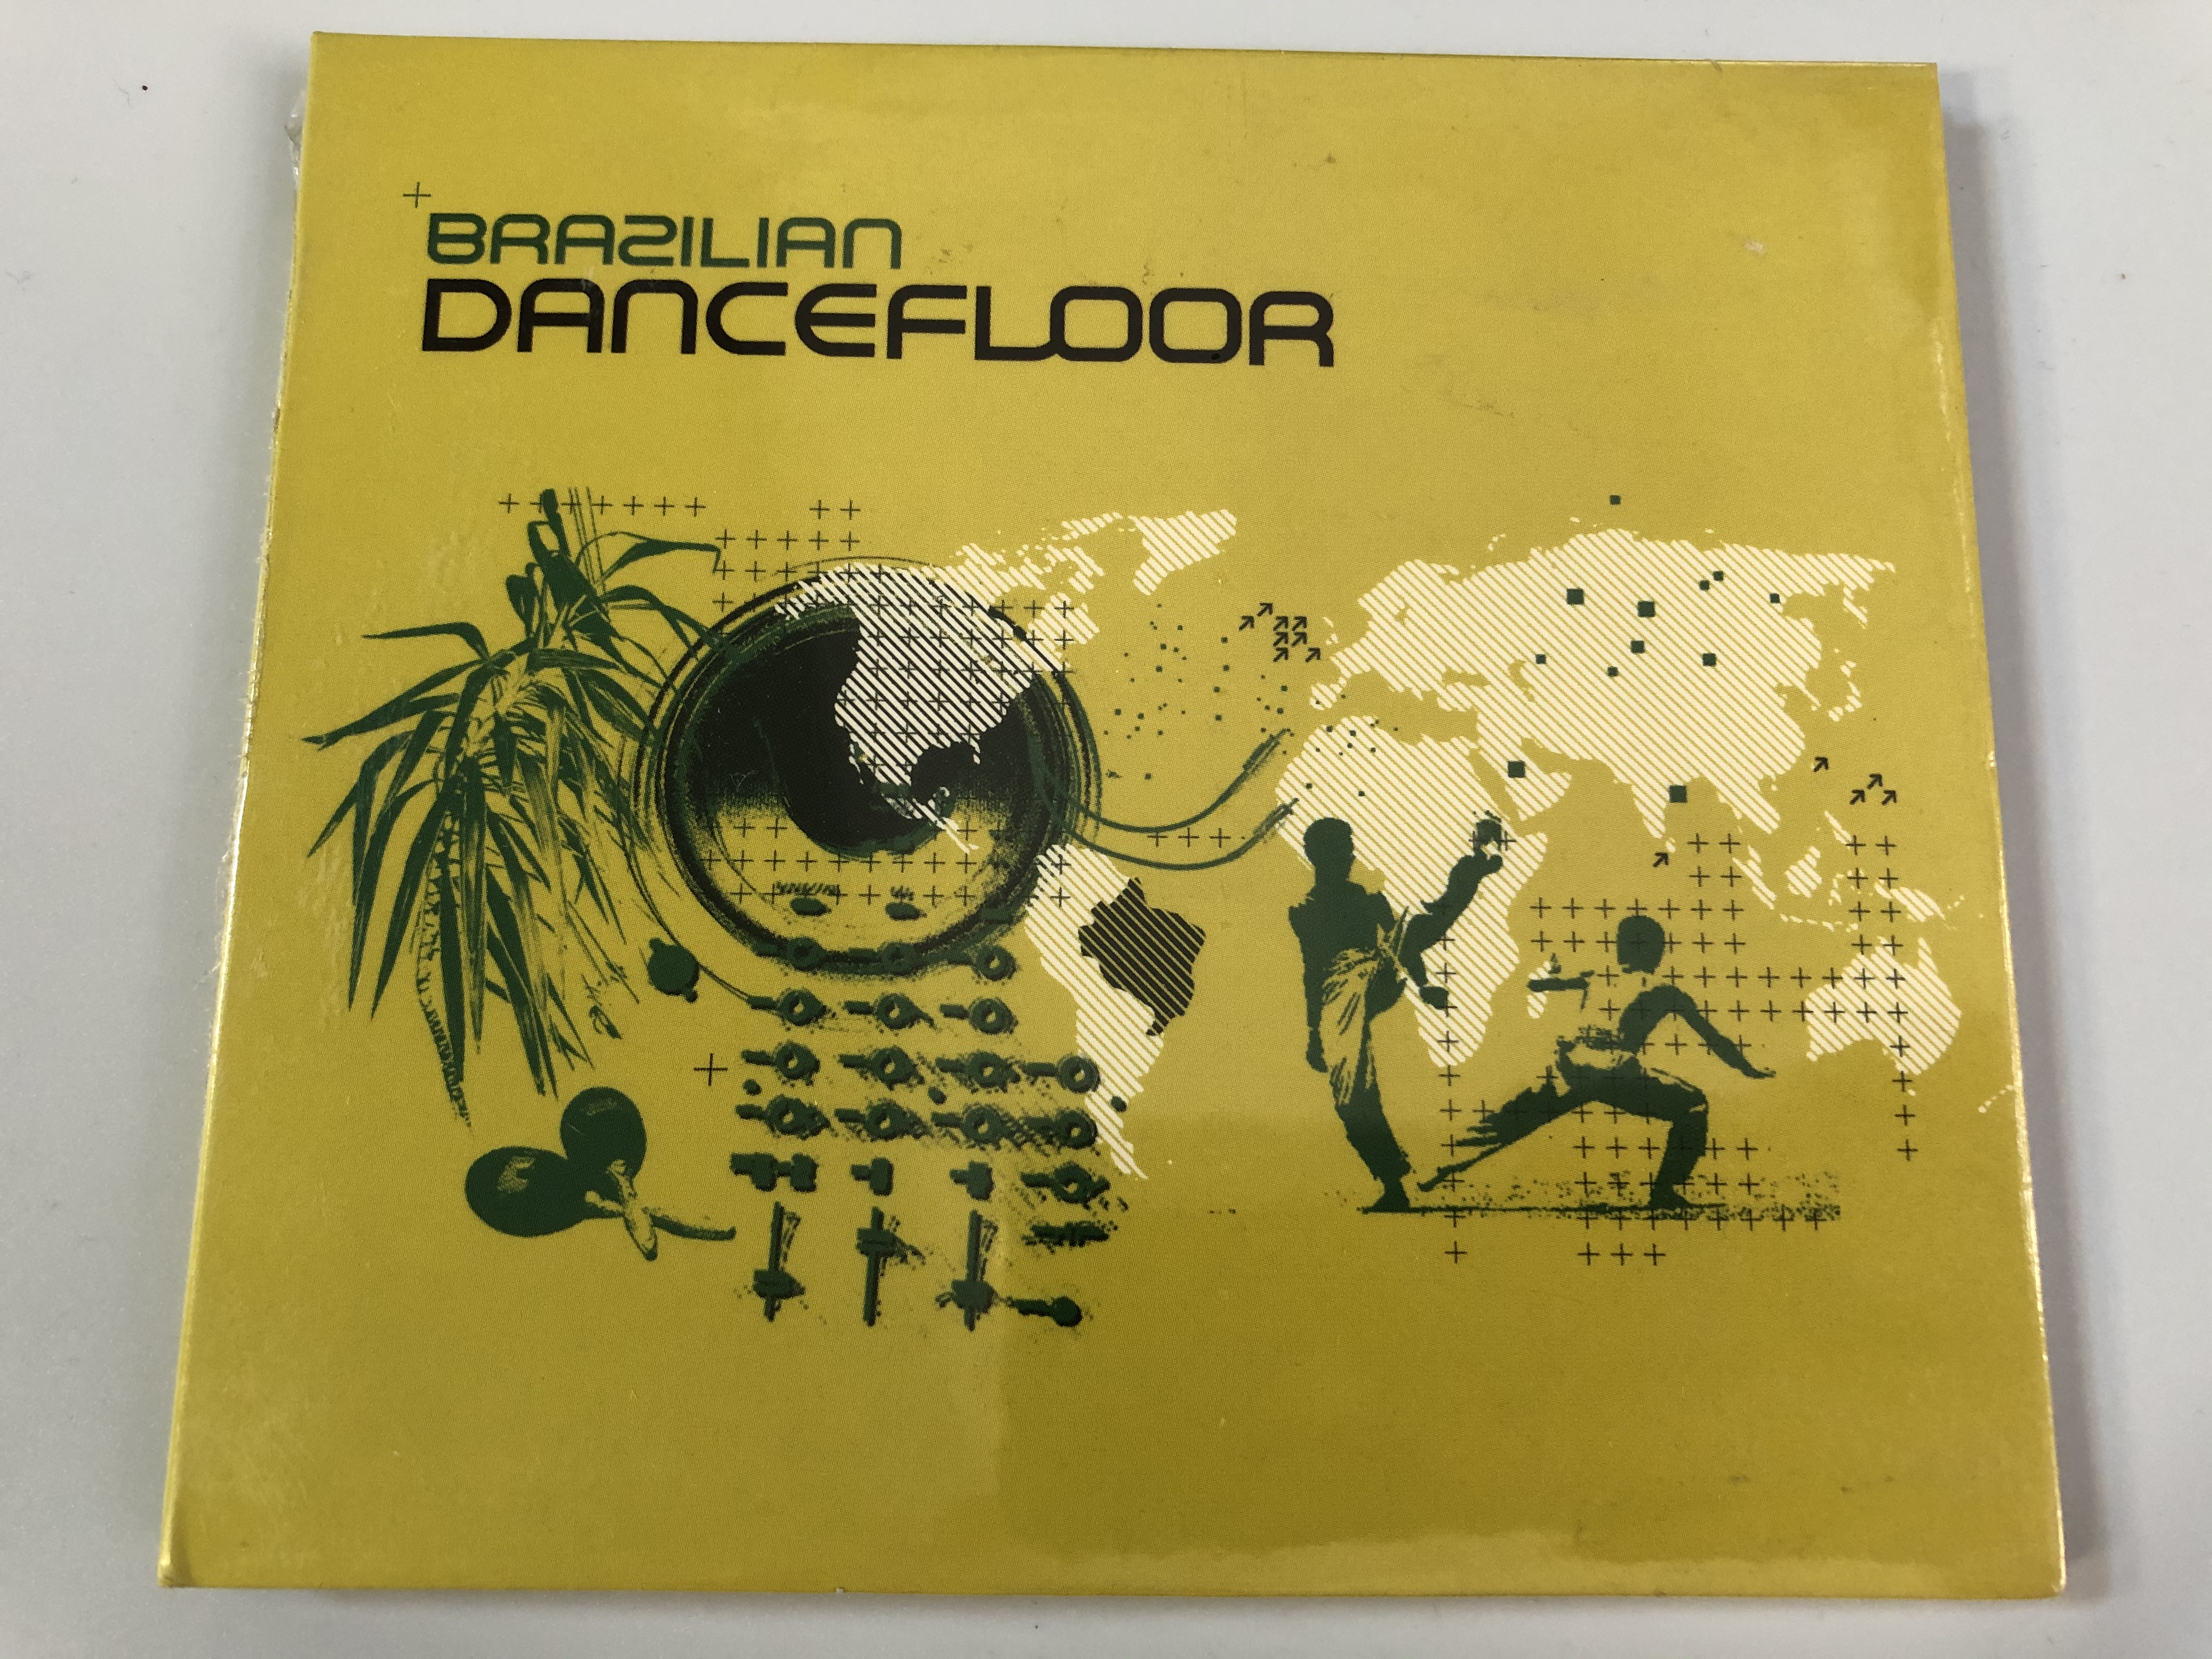 brazilian-dancefloor-wagram-music-audio-cd-2006-3116632-1-.jpg